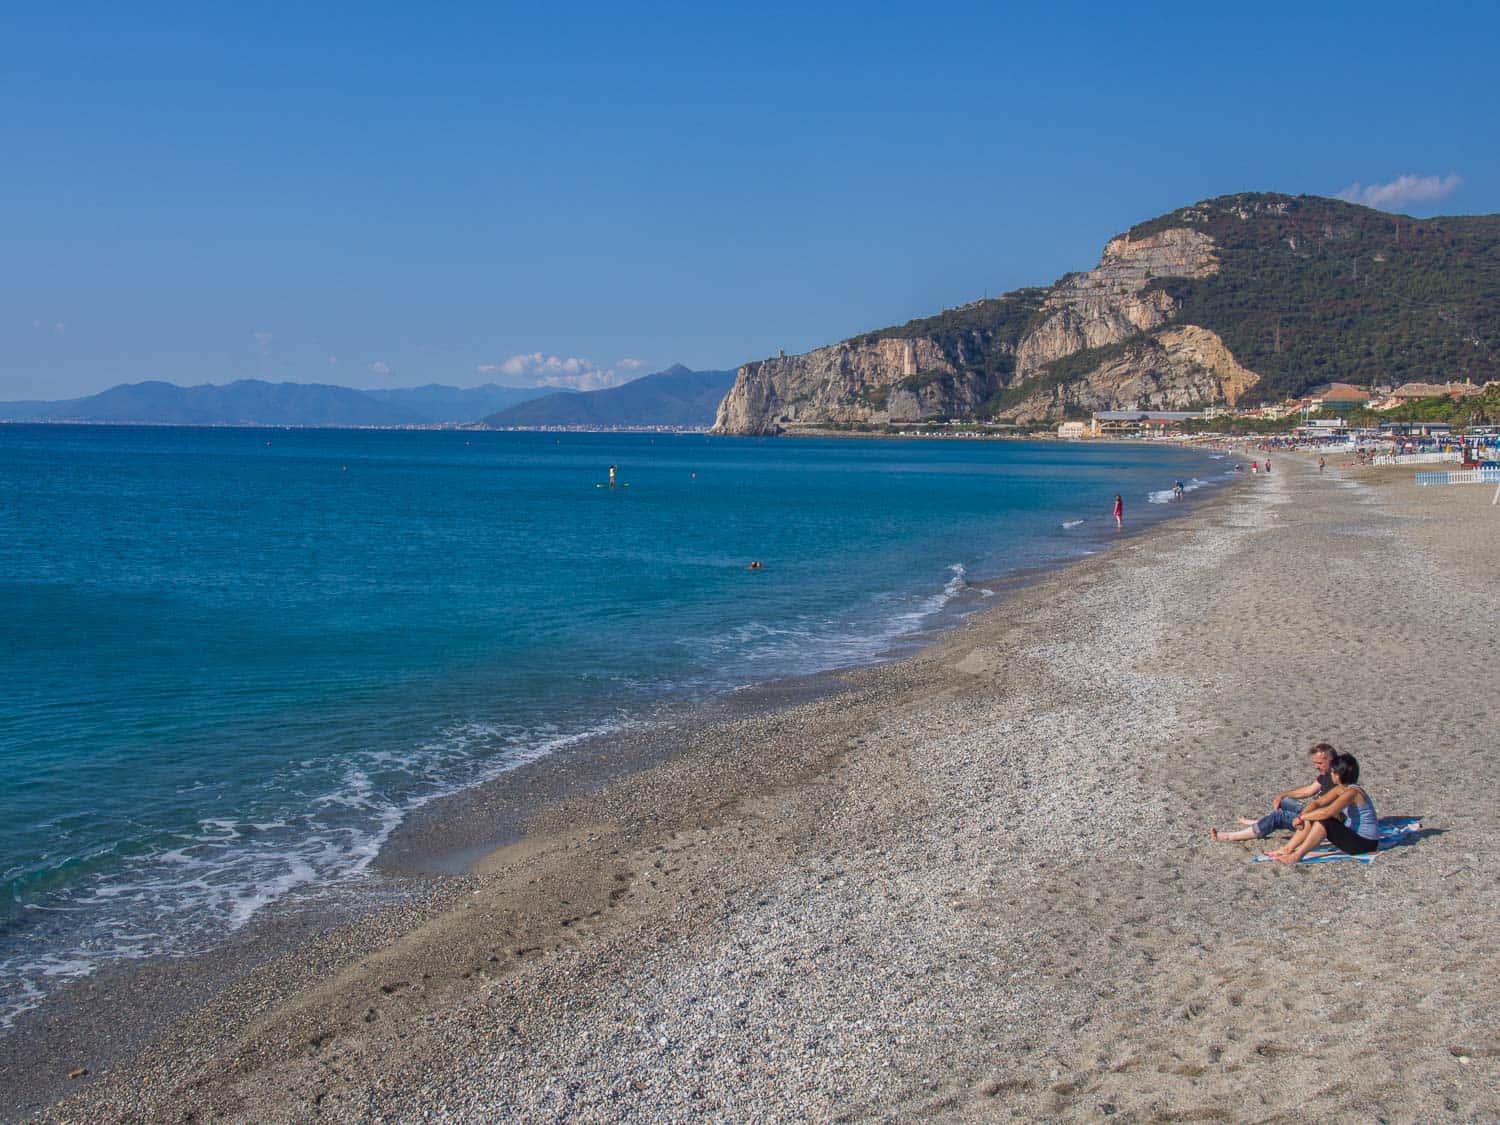 Finale Ligure beach in Liguria, Italy